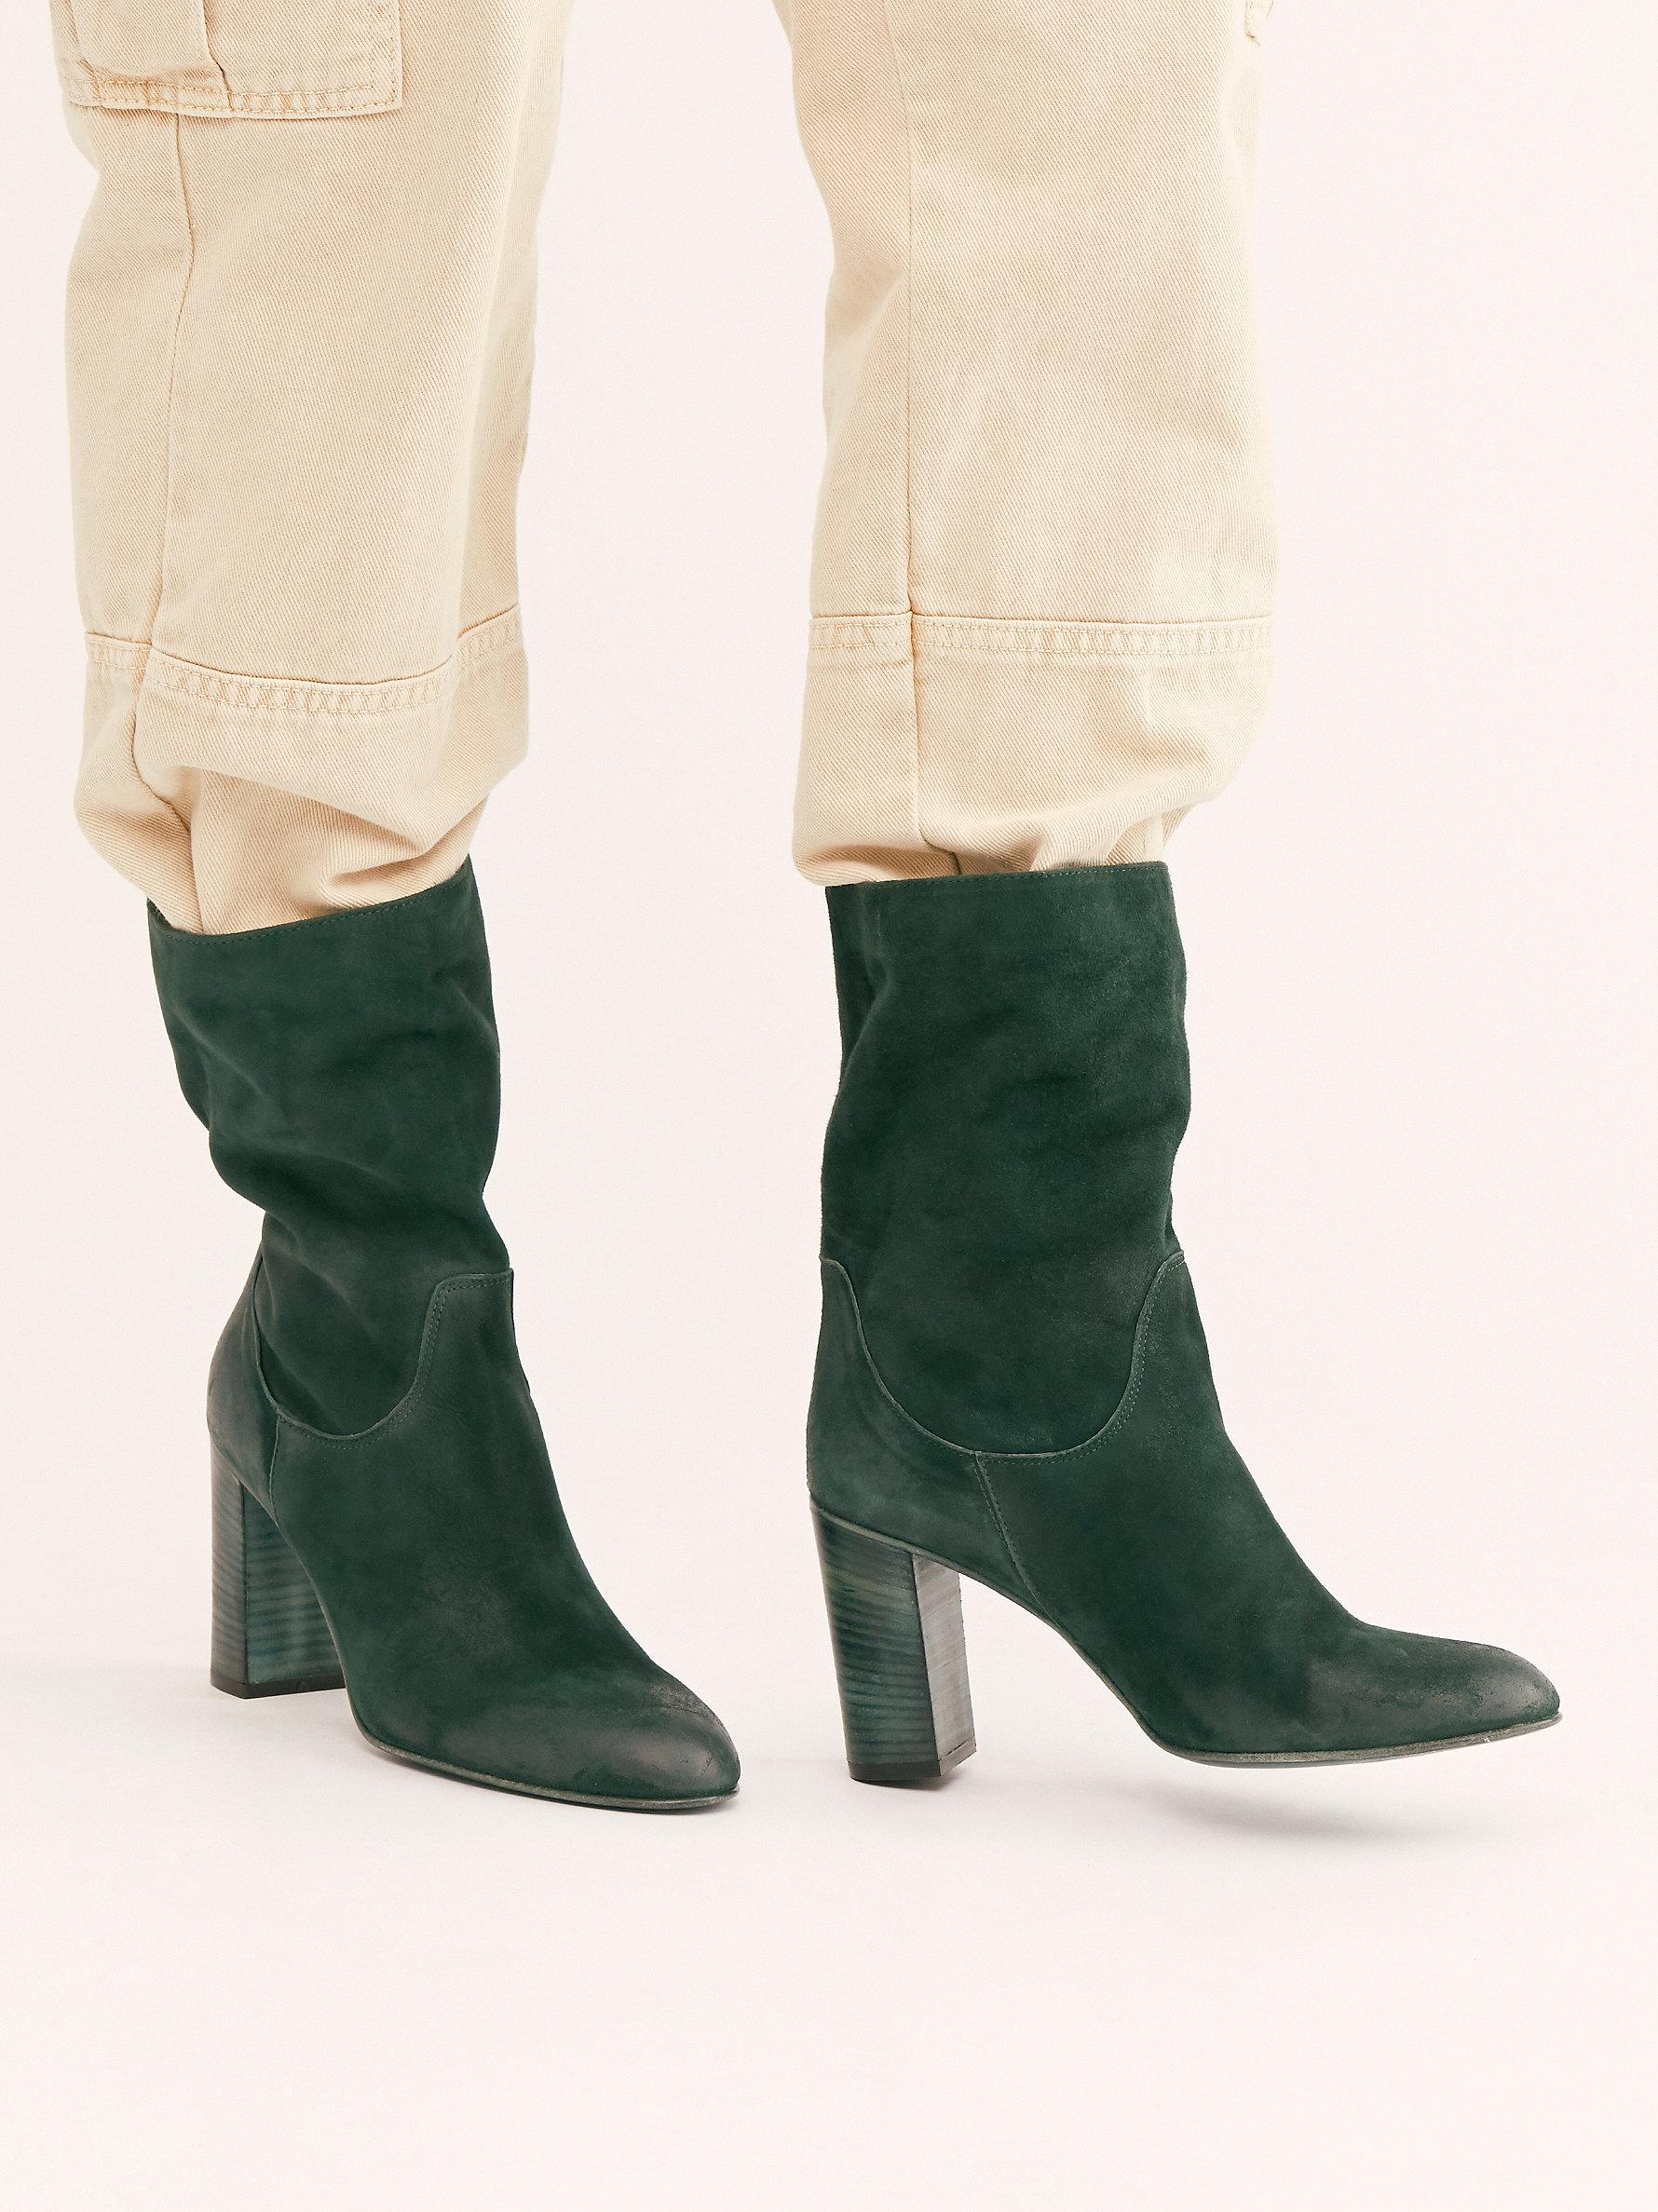 Free People Suede Dakota Heel Boots in Emerald (Green) - Lyst